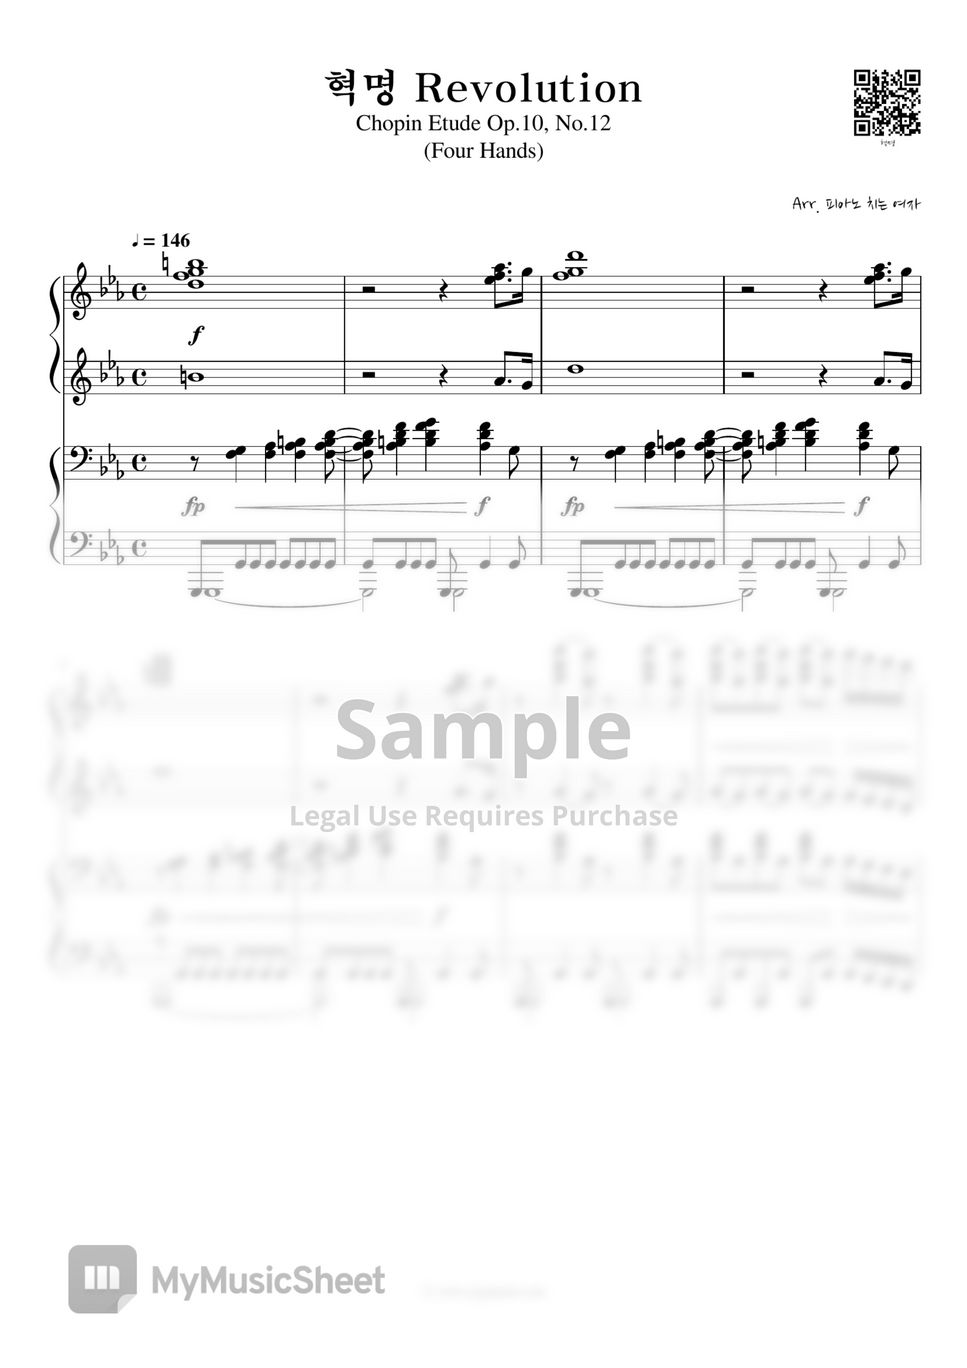 F. Chopin - 혁명 Revolutionary Etude Op.10 No.12 (4 Hands) by 피아노 치는 여자